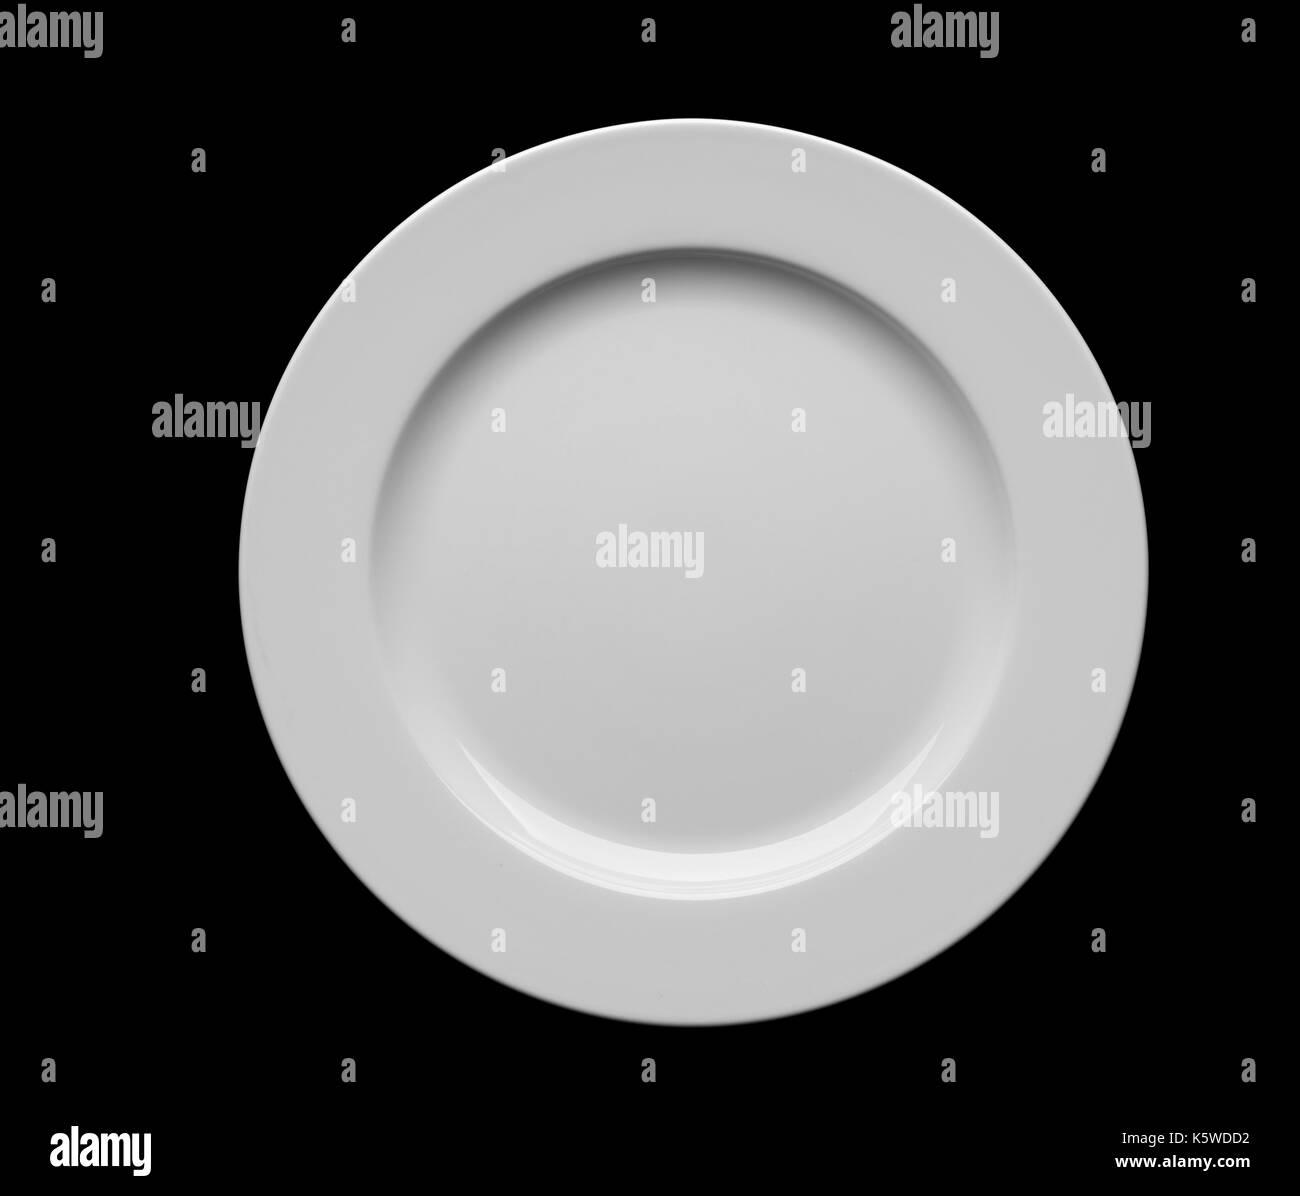 Empty white plate isolated on black background. Stock Photo